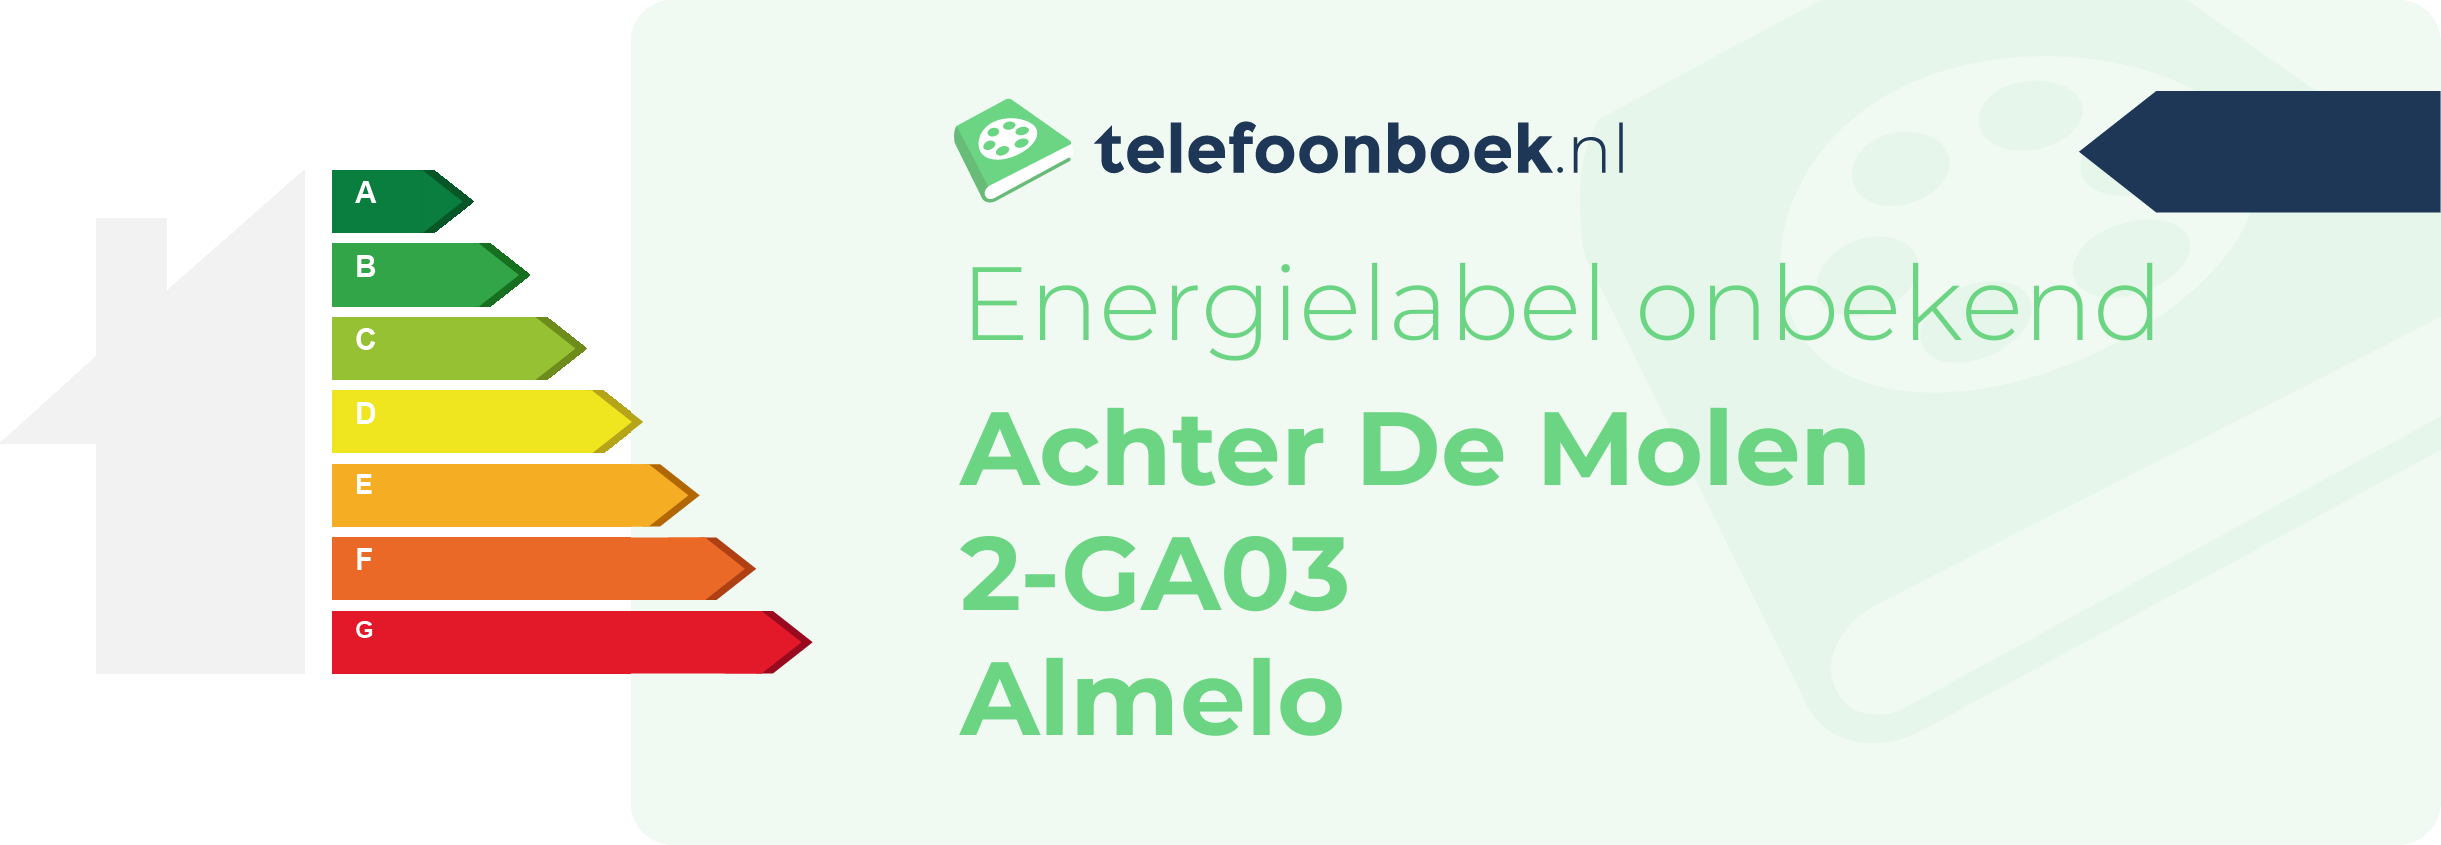 Energielabel Achter De Molen 2-GA03 Almelo